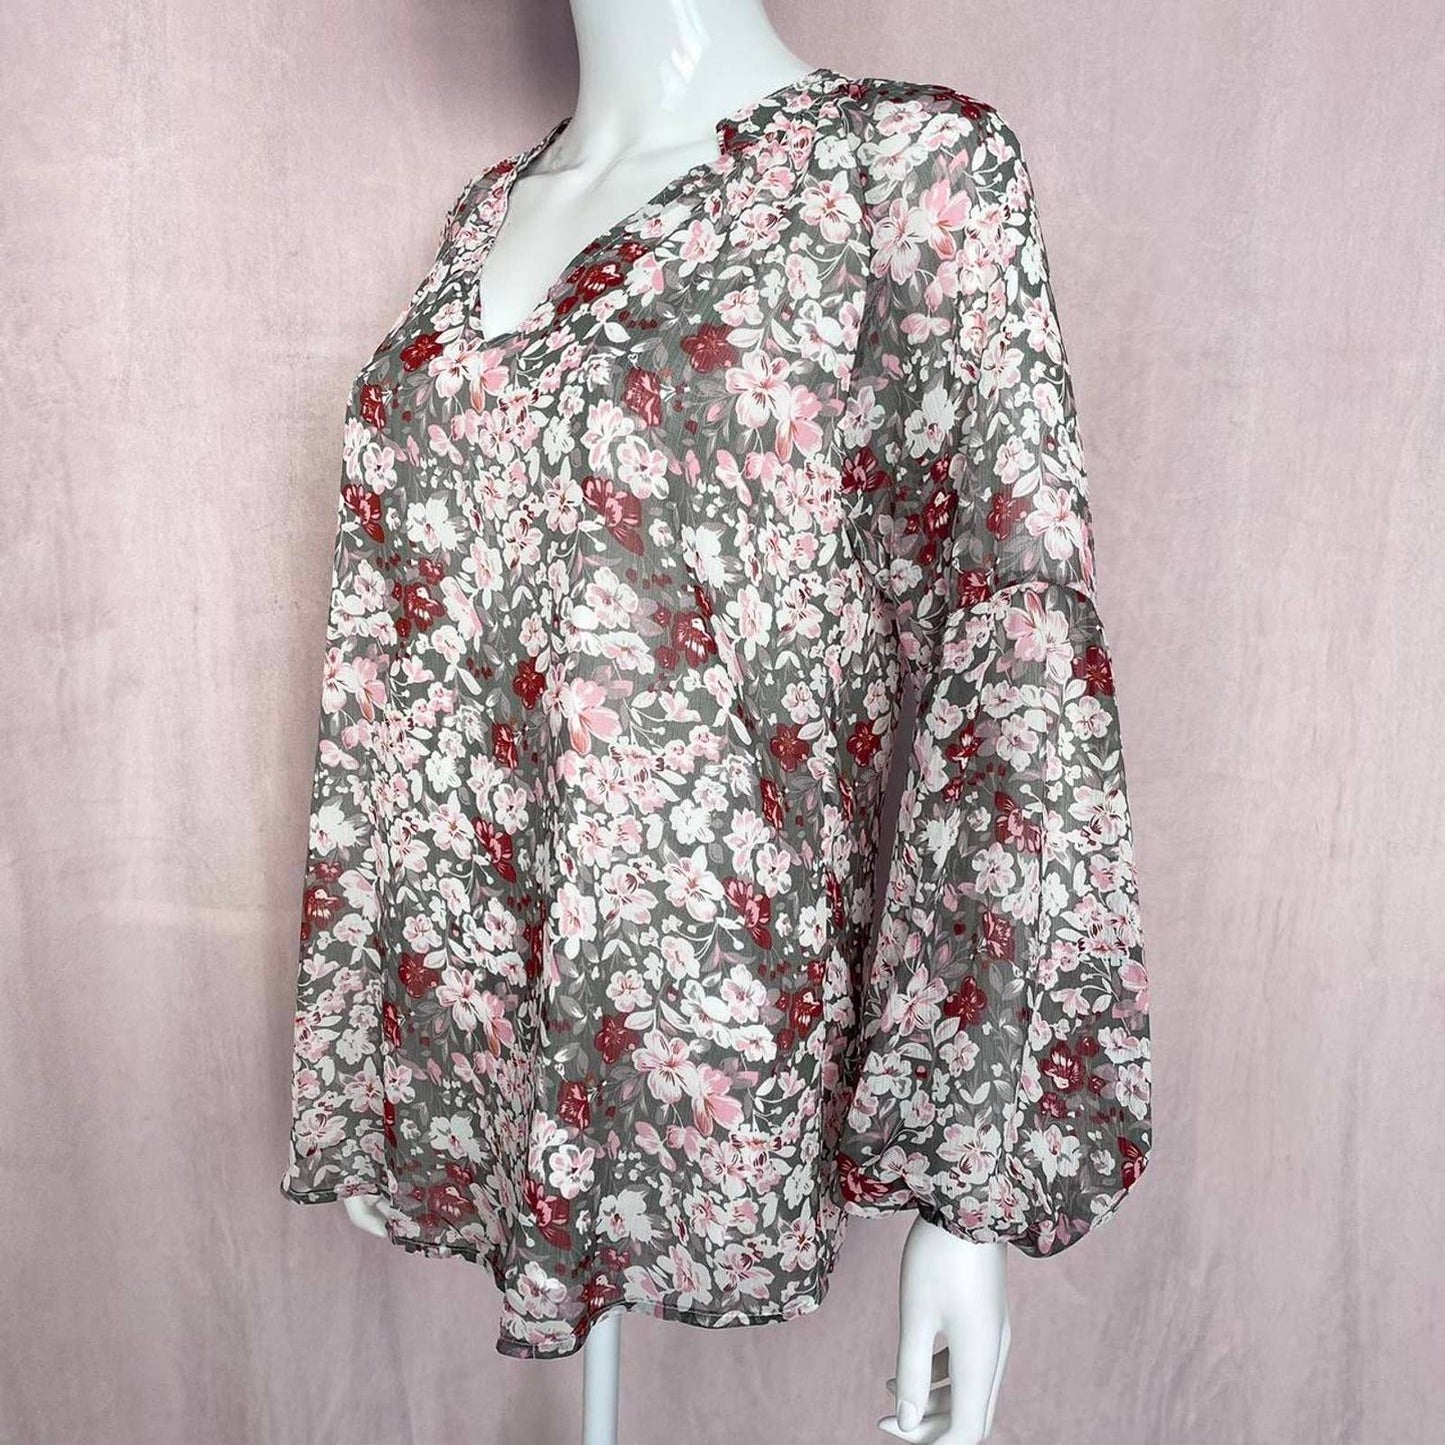 Secondhand Floral Chiffon V-Neck Long Sleeve Blouse, Size Medium